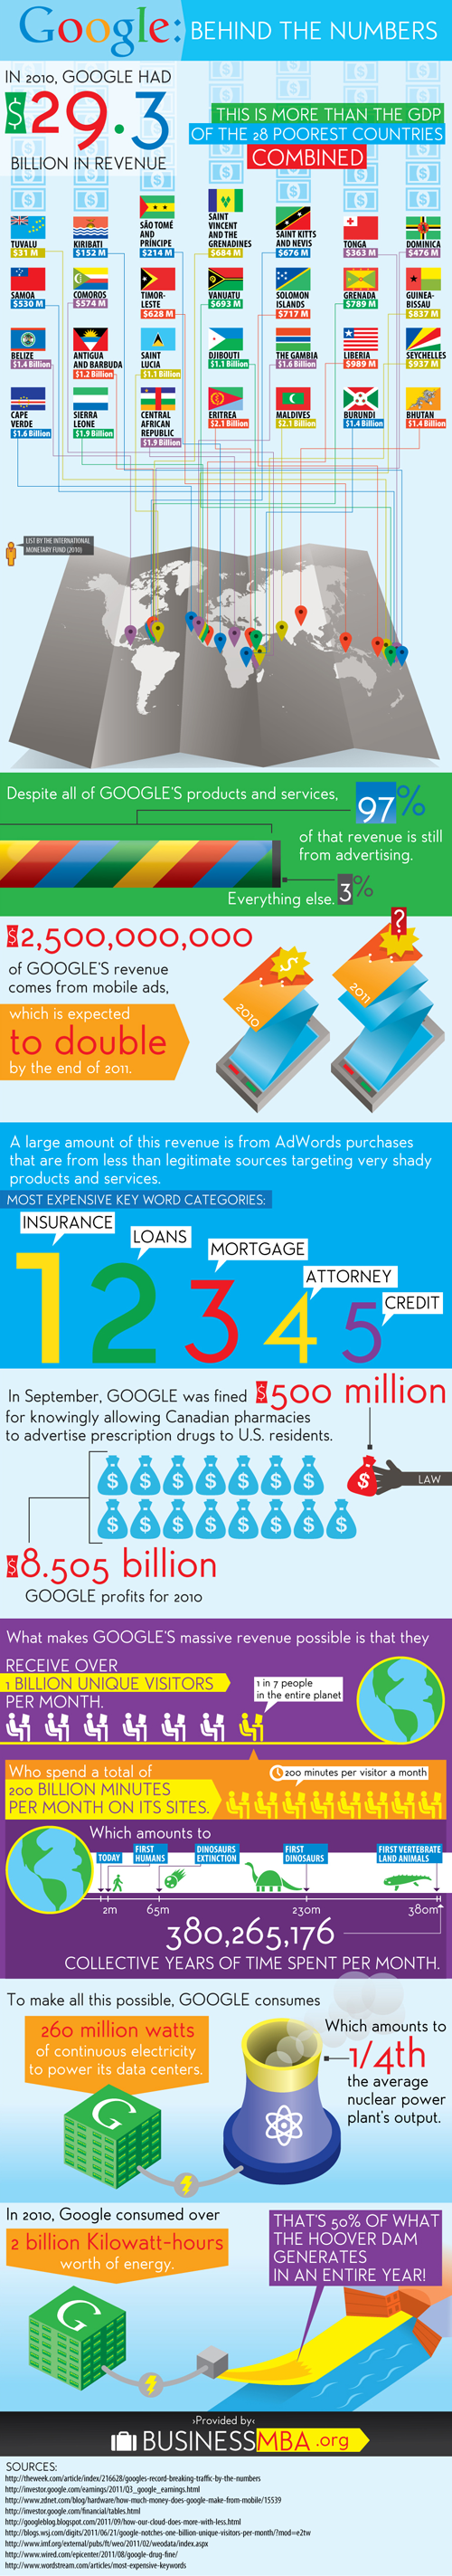 Google Adwords: Behind The Numbers